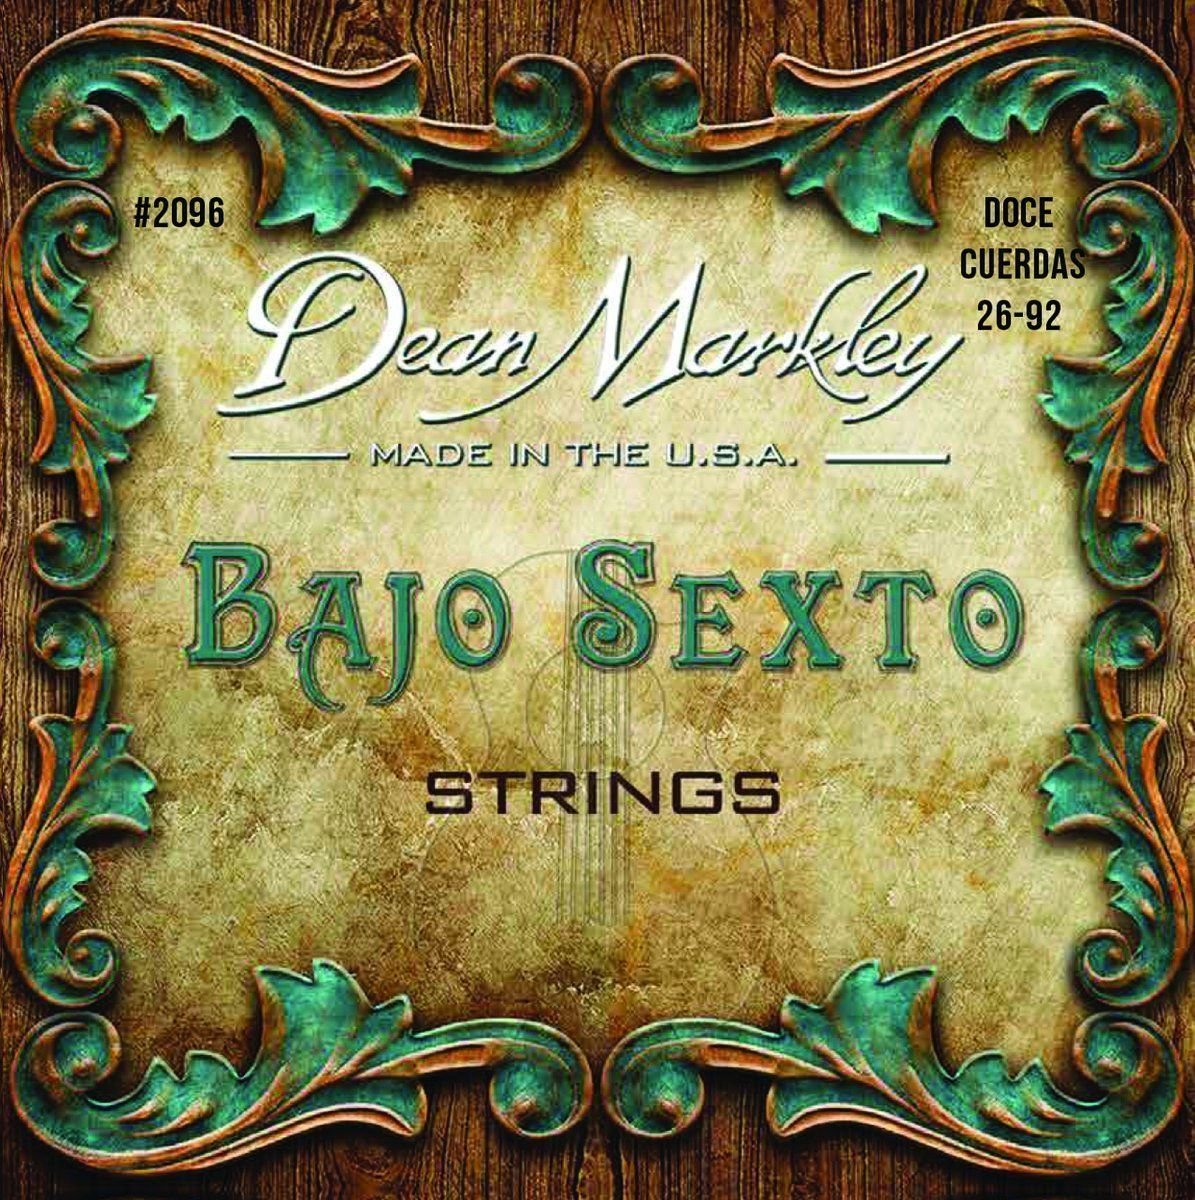 Struny pre banjo Dean Markley 2096 Bajo Sexto